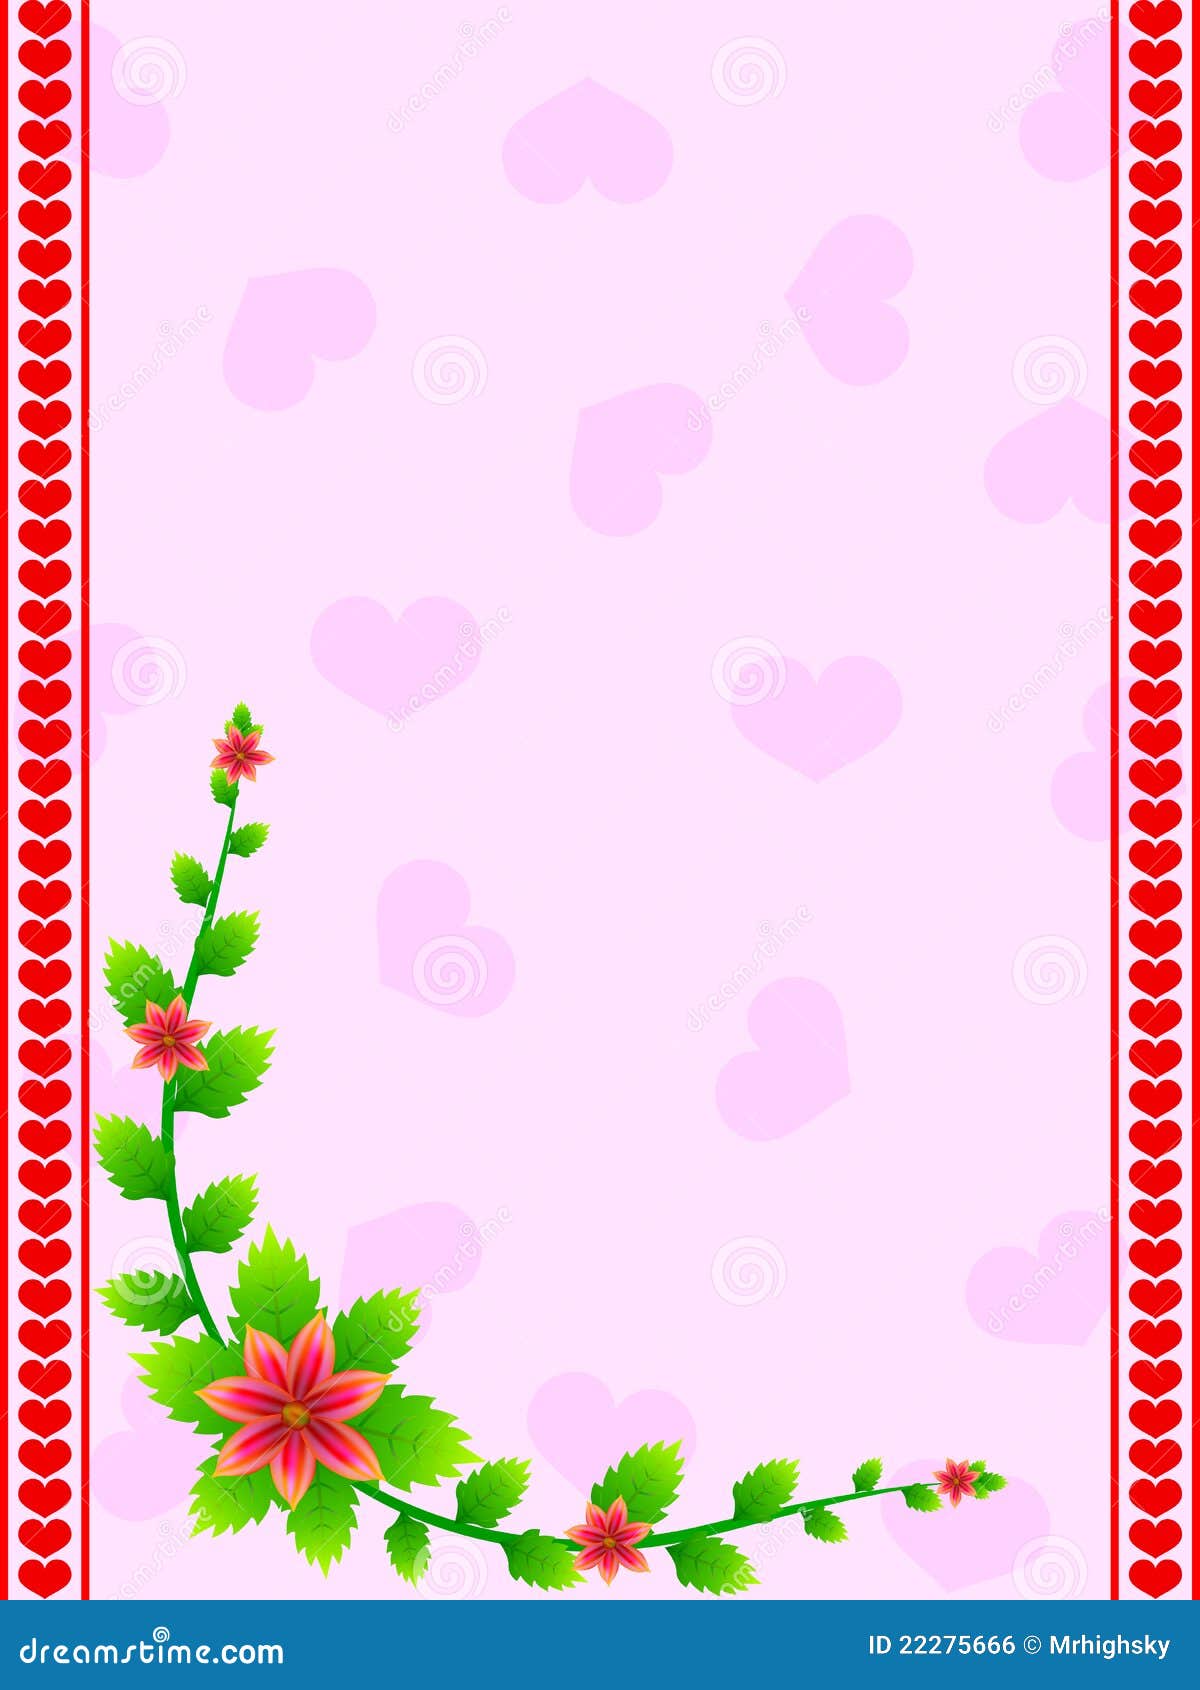 Romantic border background stock vector. Illustration of vertical - 22275666